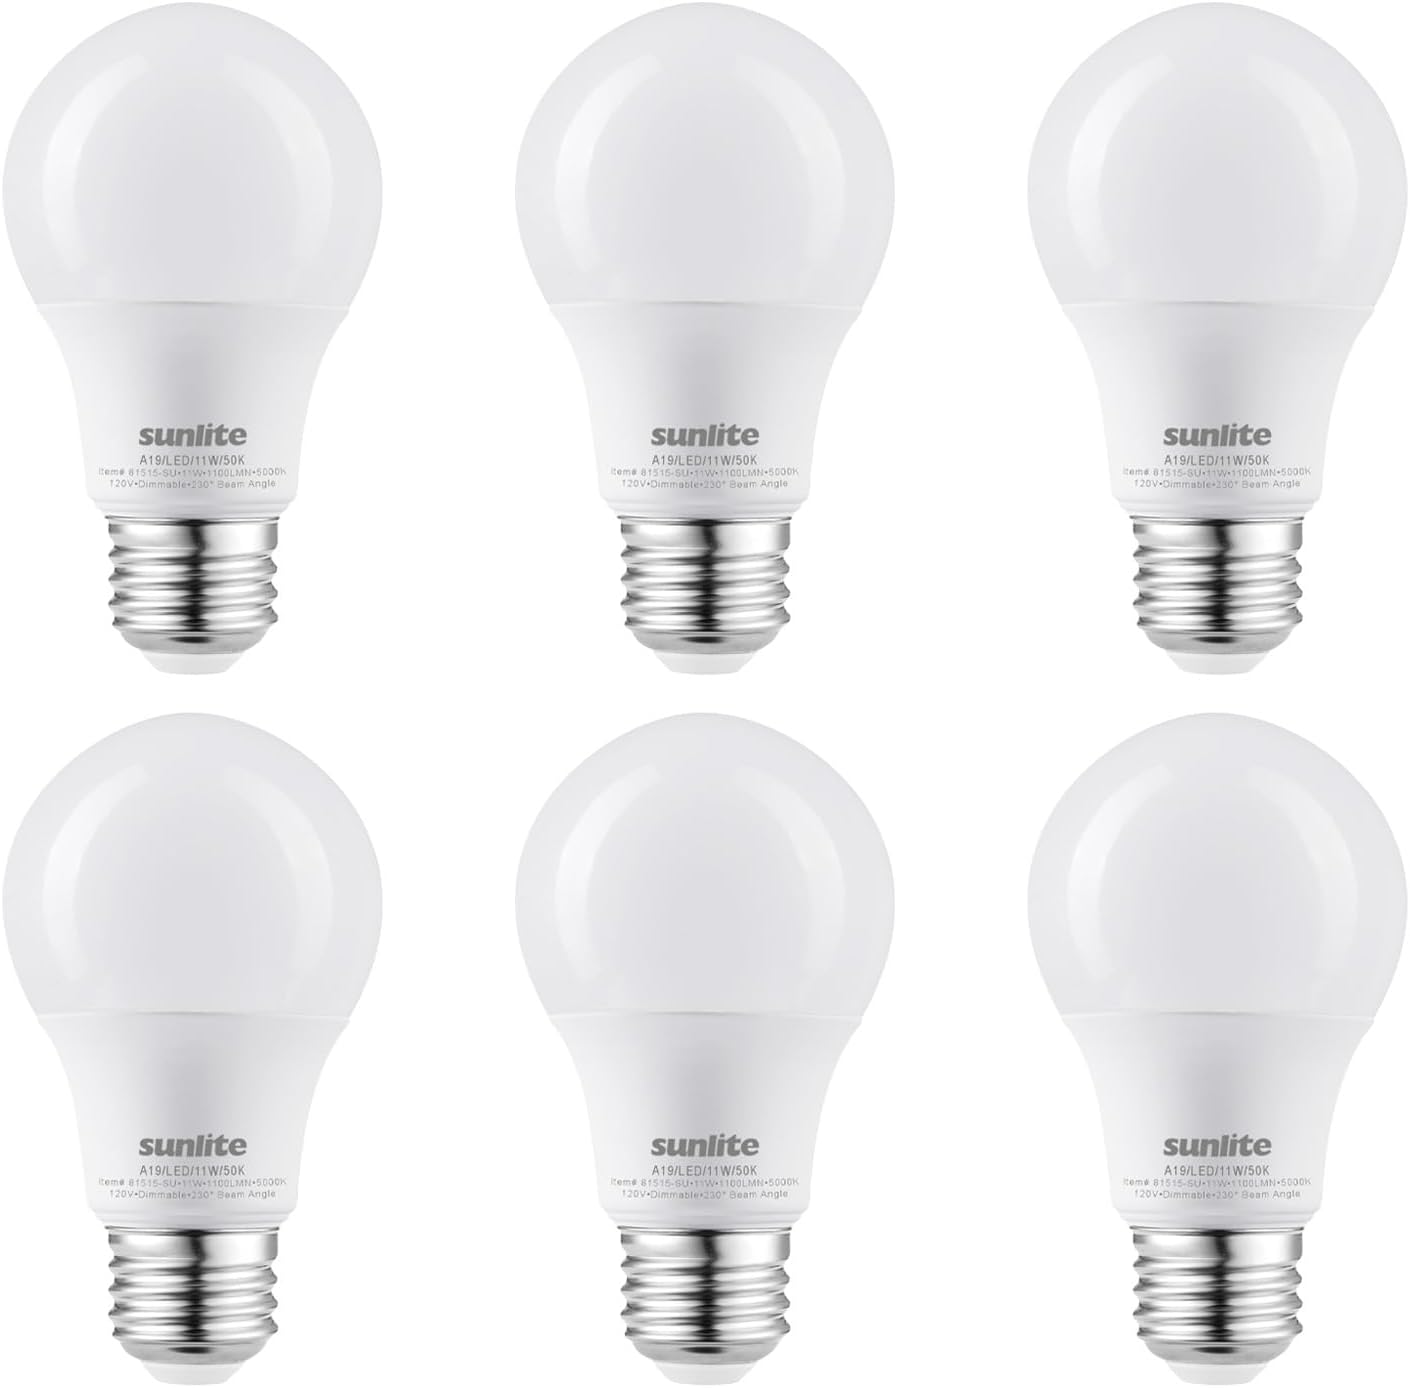 Sunlite LED A19 Light Bulb, 11 Watts (75W Equivalent), 1100 Lmns, 120V, Dimmable, Medium E26 Base, Energy Star, 90 CRI, 230 Degree Beam Angle, UL Listed, Title-20 Compliant, 5000K Daylight, 6 Pack